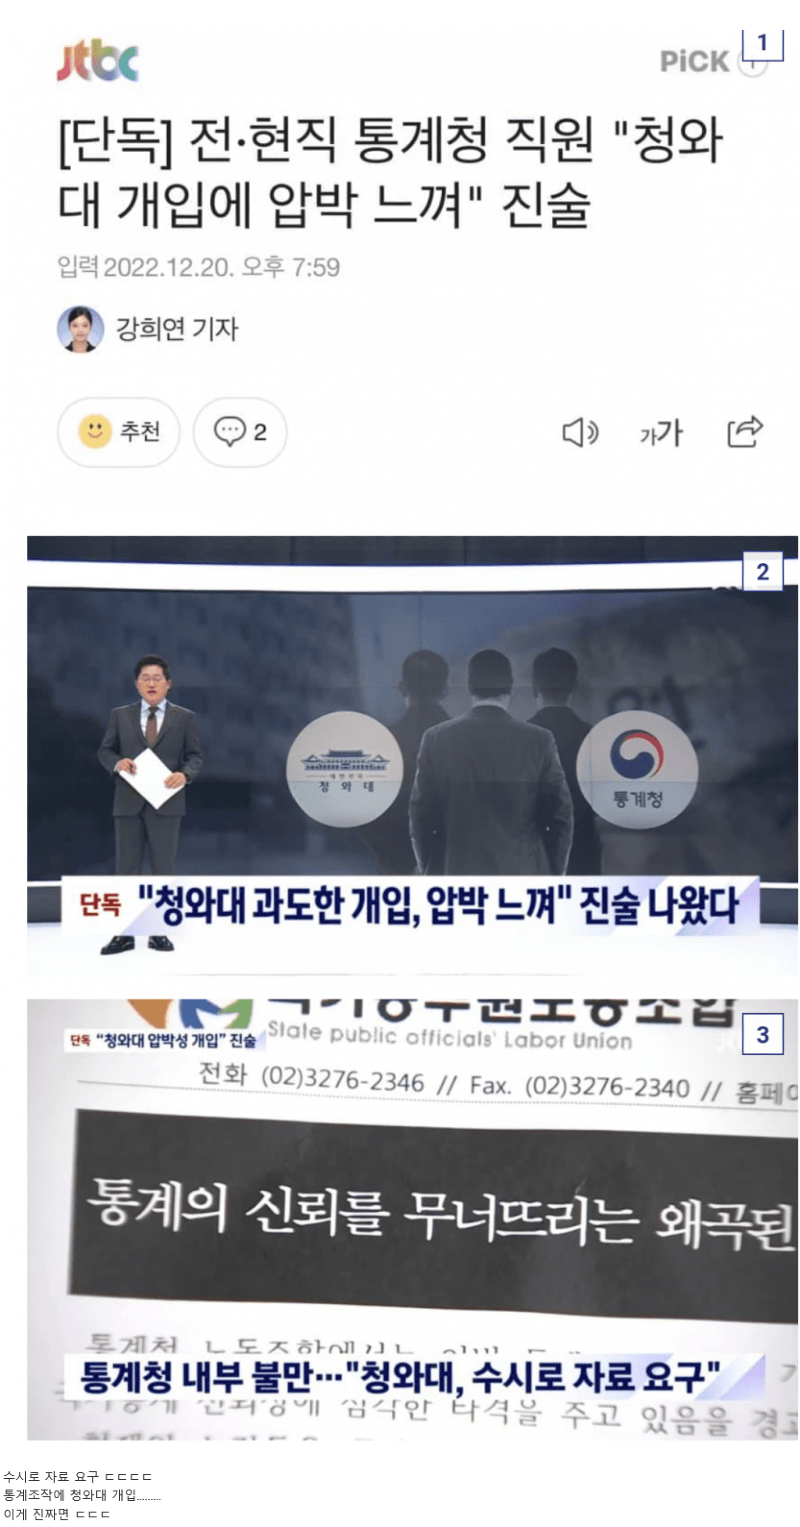 Screenshot 2022-12-20 at 22-34-57 JTBC 단독 ㄷㄷㄷㄷ 민주당 멸망 ㄷㄷㄷㄷㄷㄷㄷㄷ - 부동산 갤러리.png